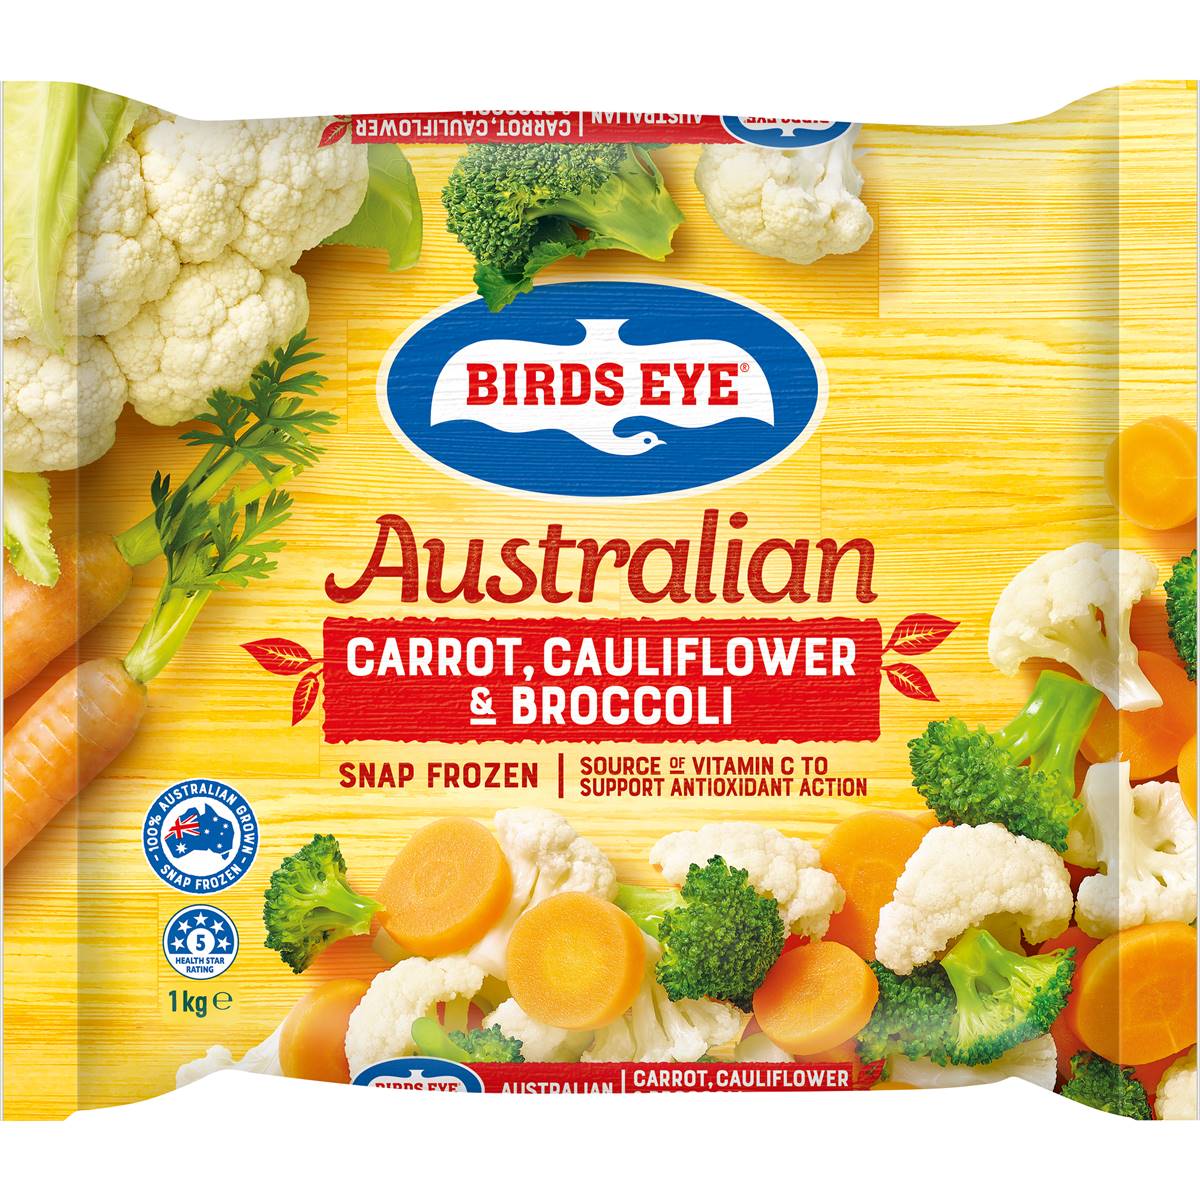 Calories in Birds Eye Snap Frozen Carrot, Cauliflower & Broccoli